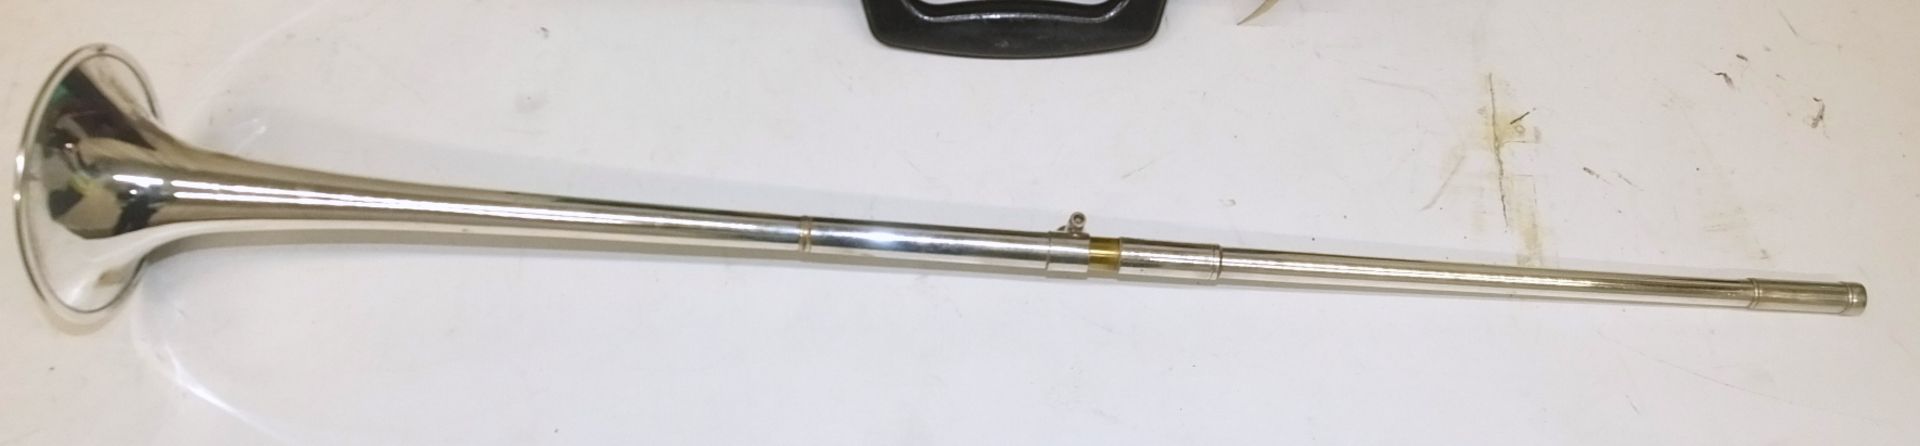 McQueens Fanfare Trumpet - Serial Number - 26541 - Image 6 of 7